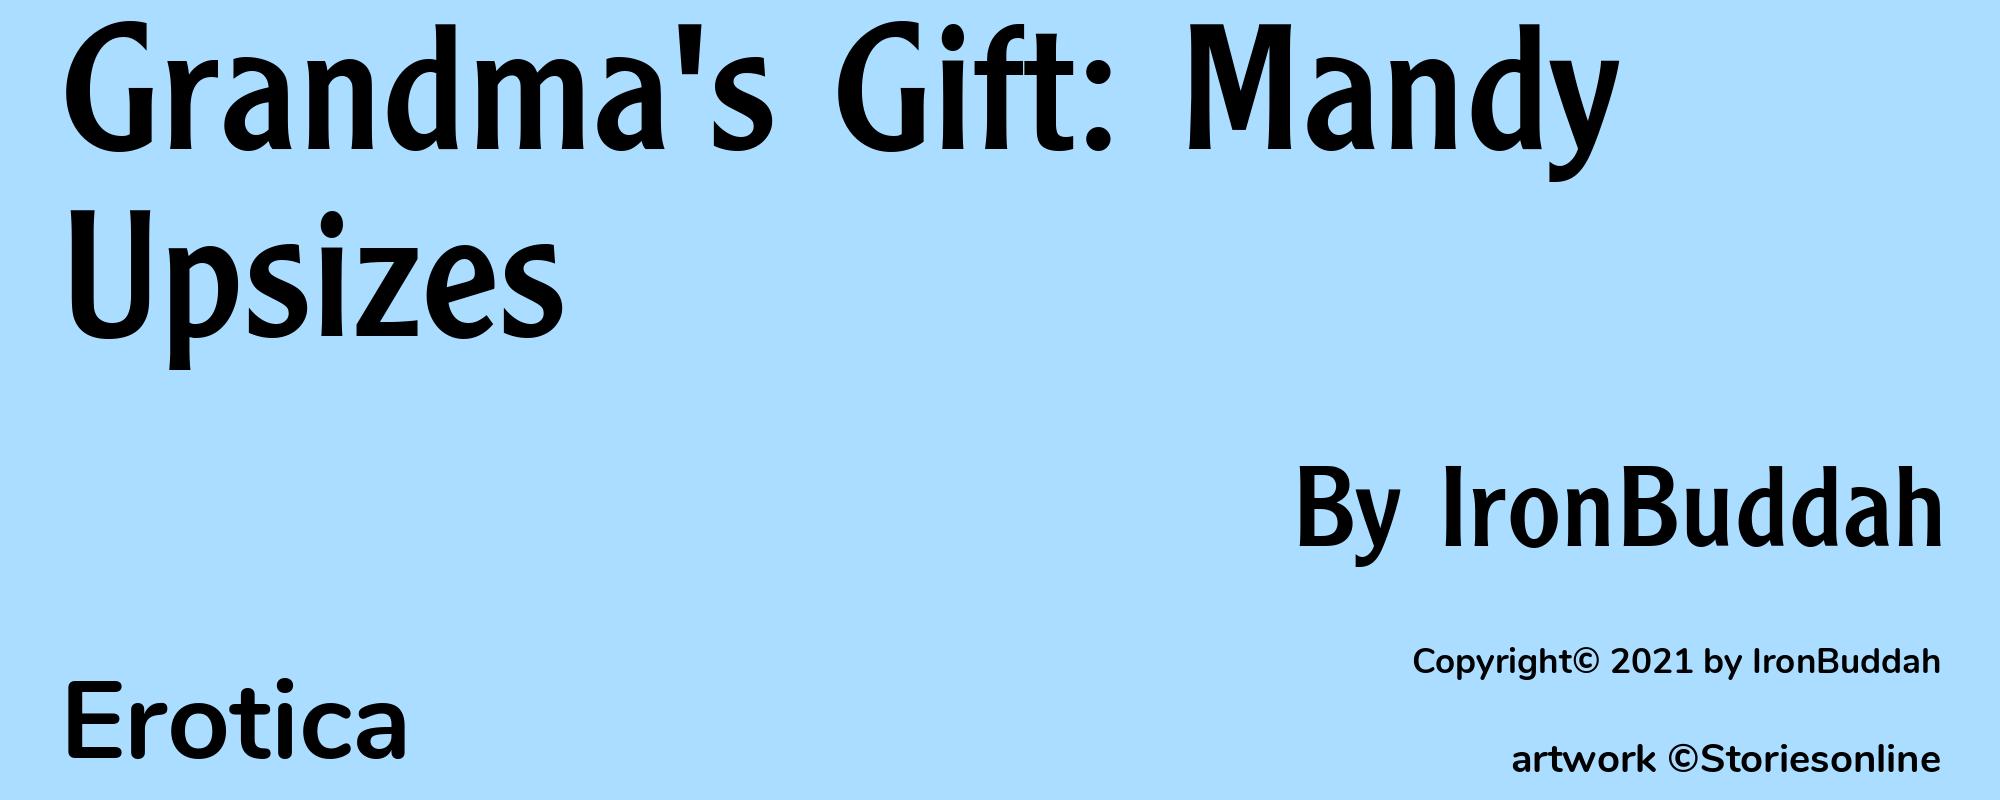 Grandma's Gift: Mandy Upsizes - Cover